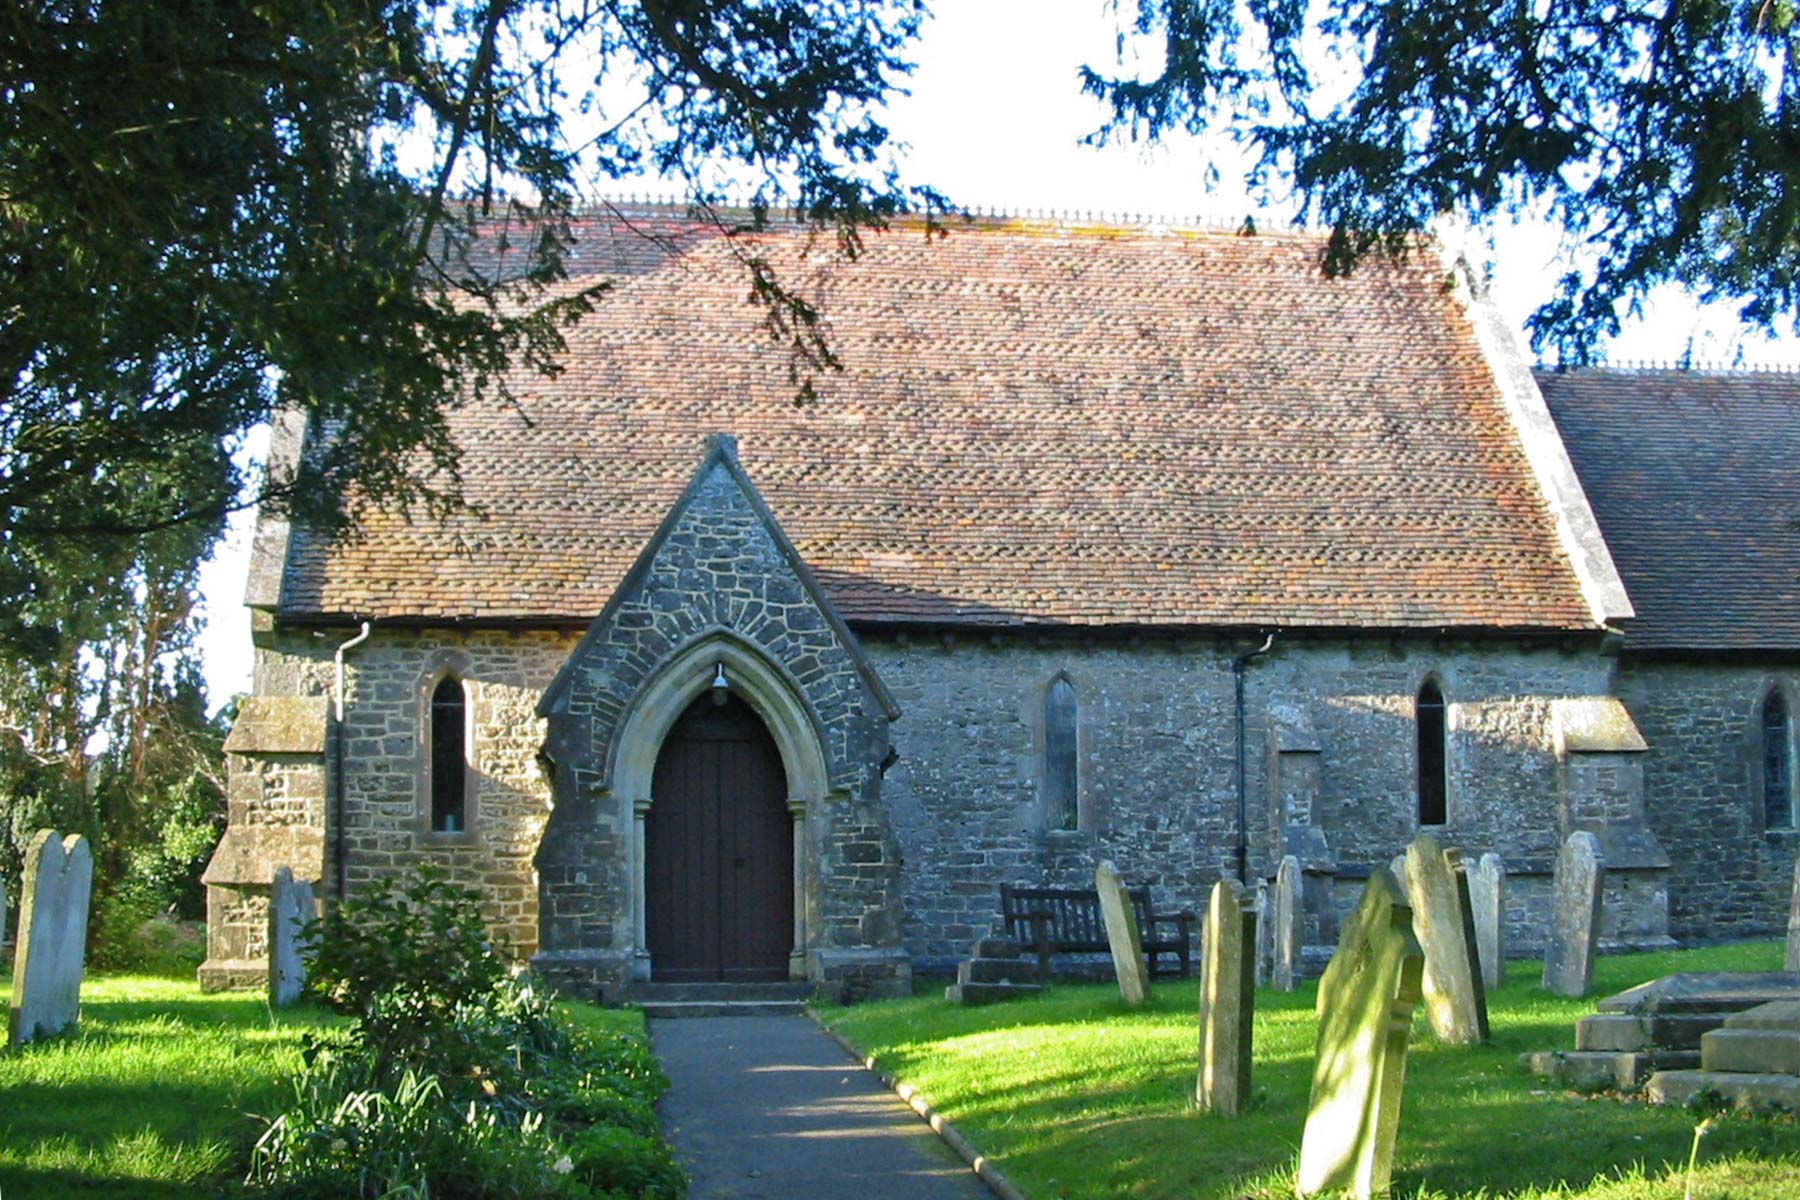 St Peter's Church, Haven Street — A